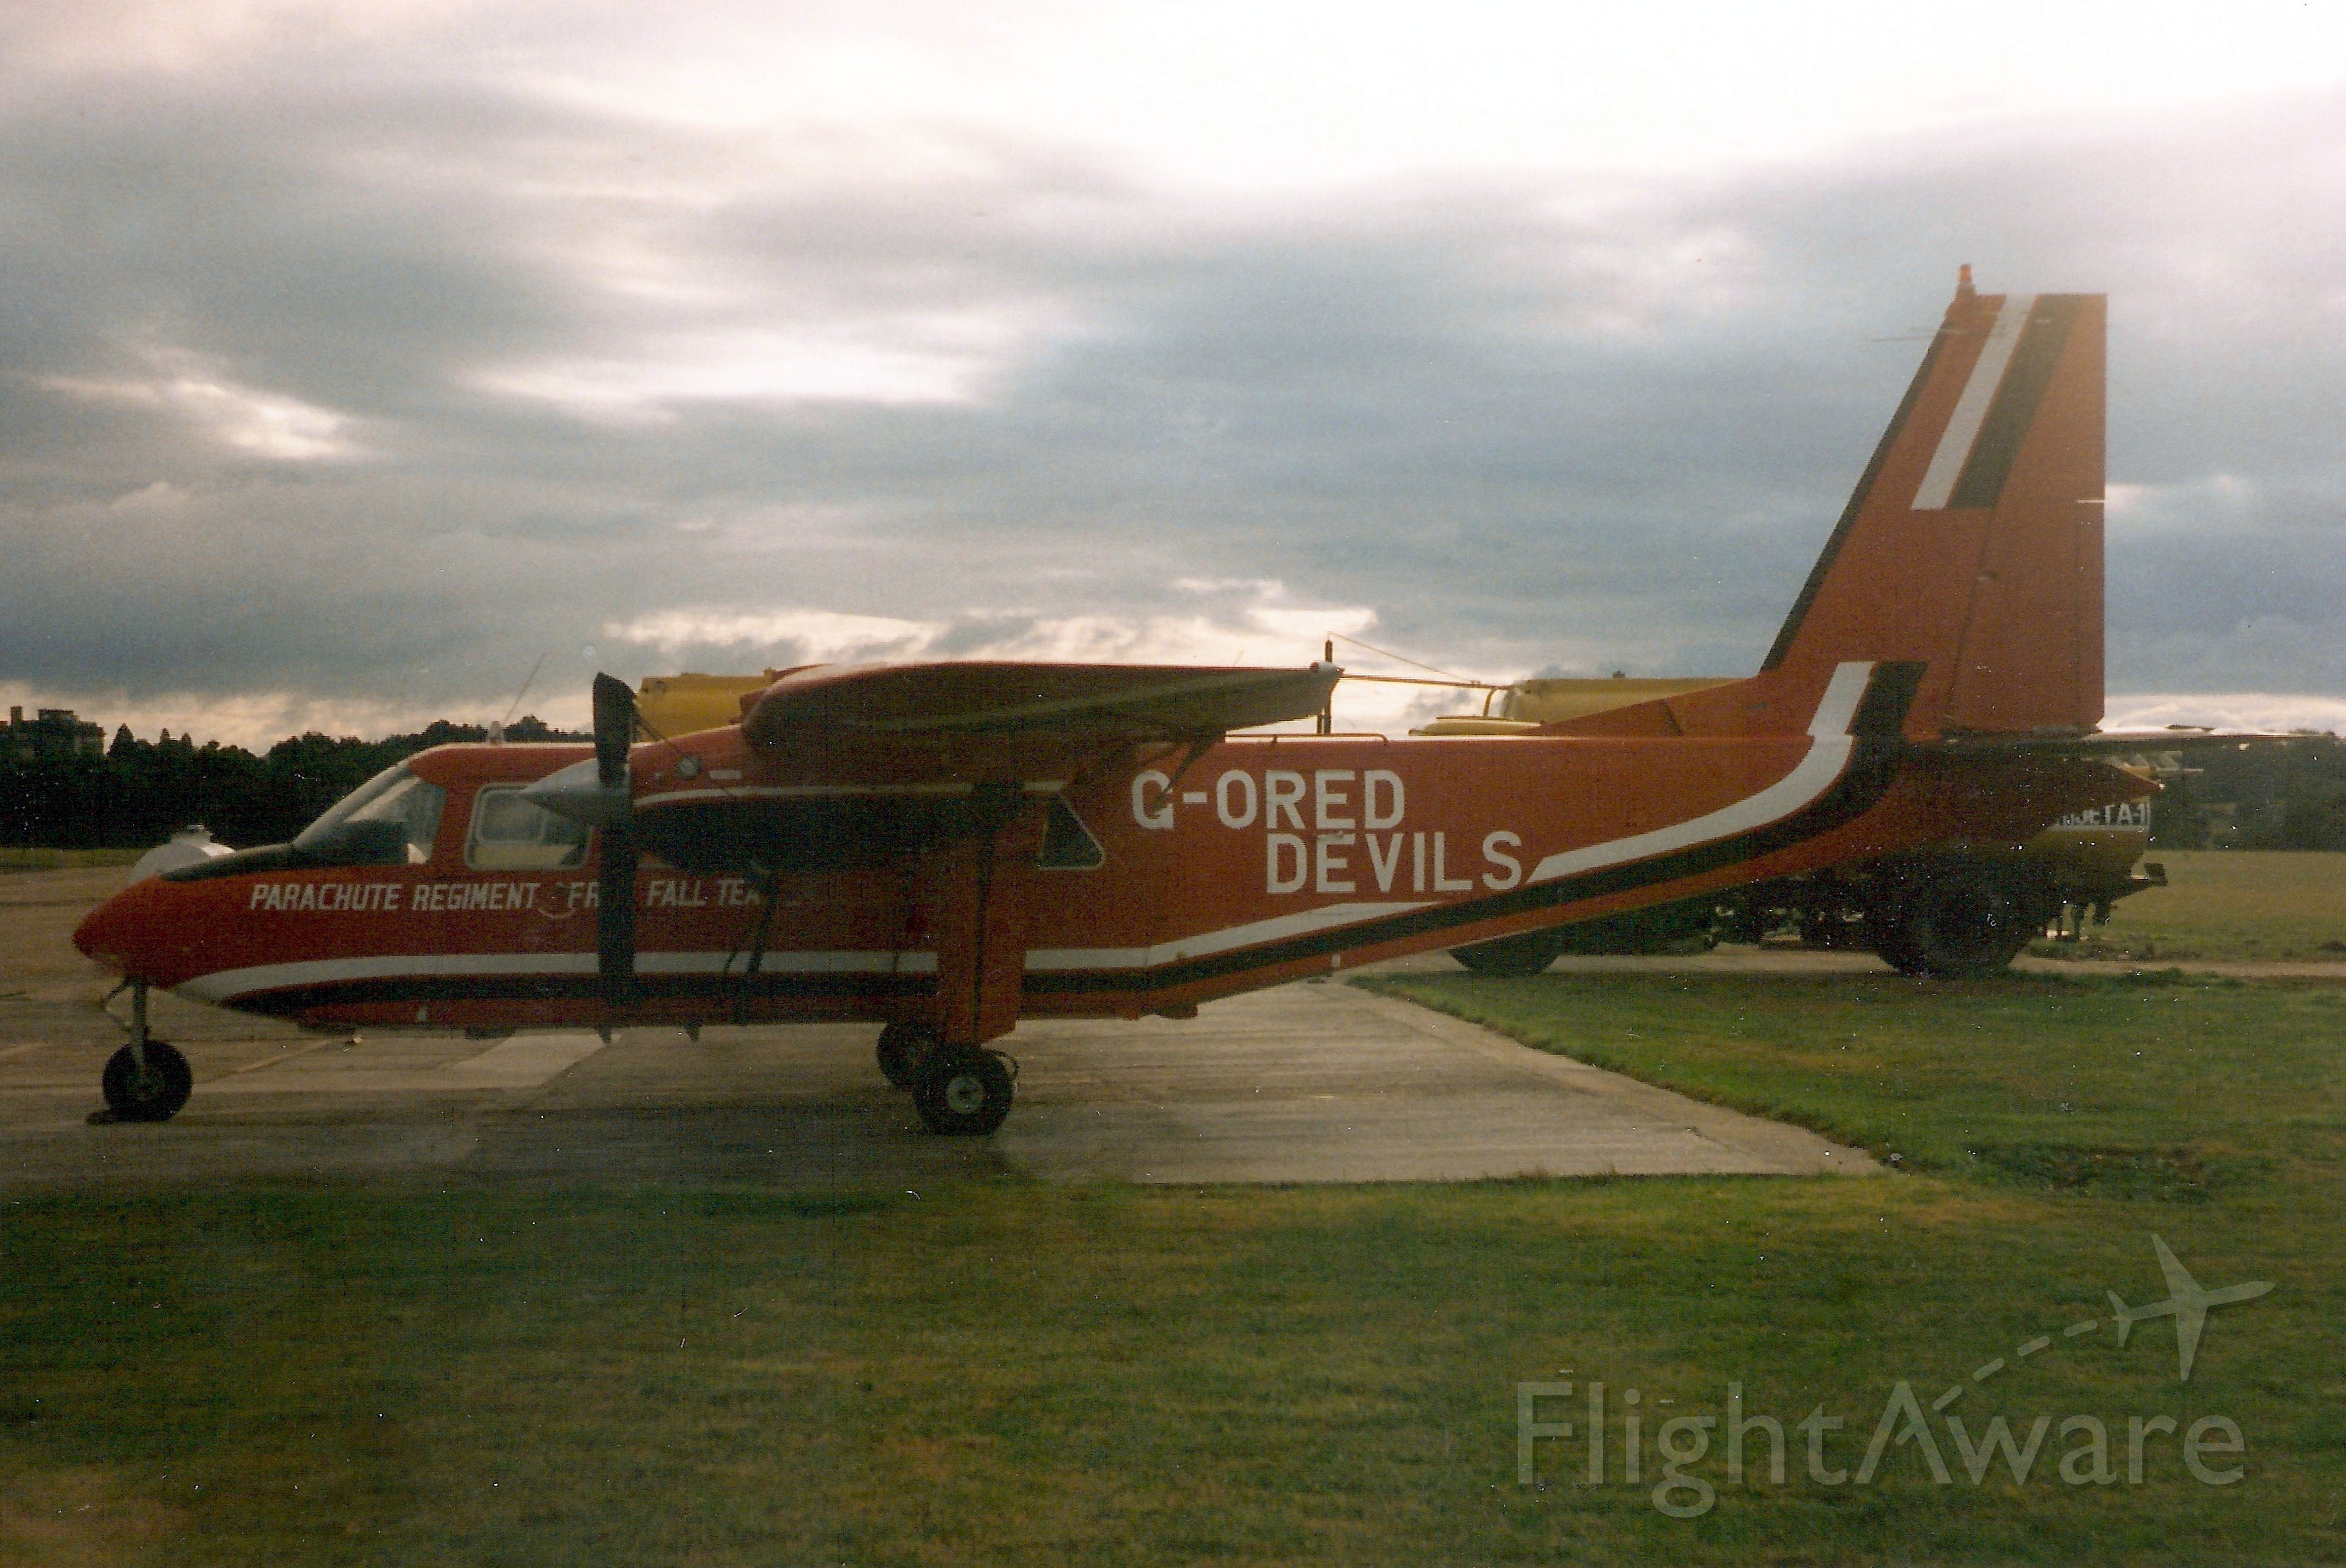 ROMAERO Turbine Islander (G-ORED) - Seen here in Aug-94.